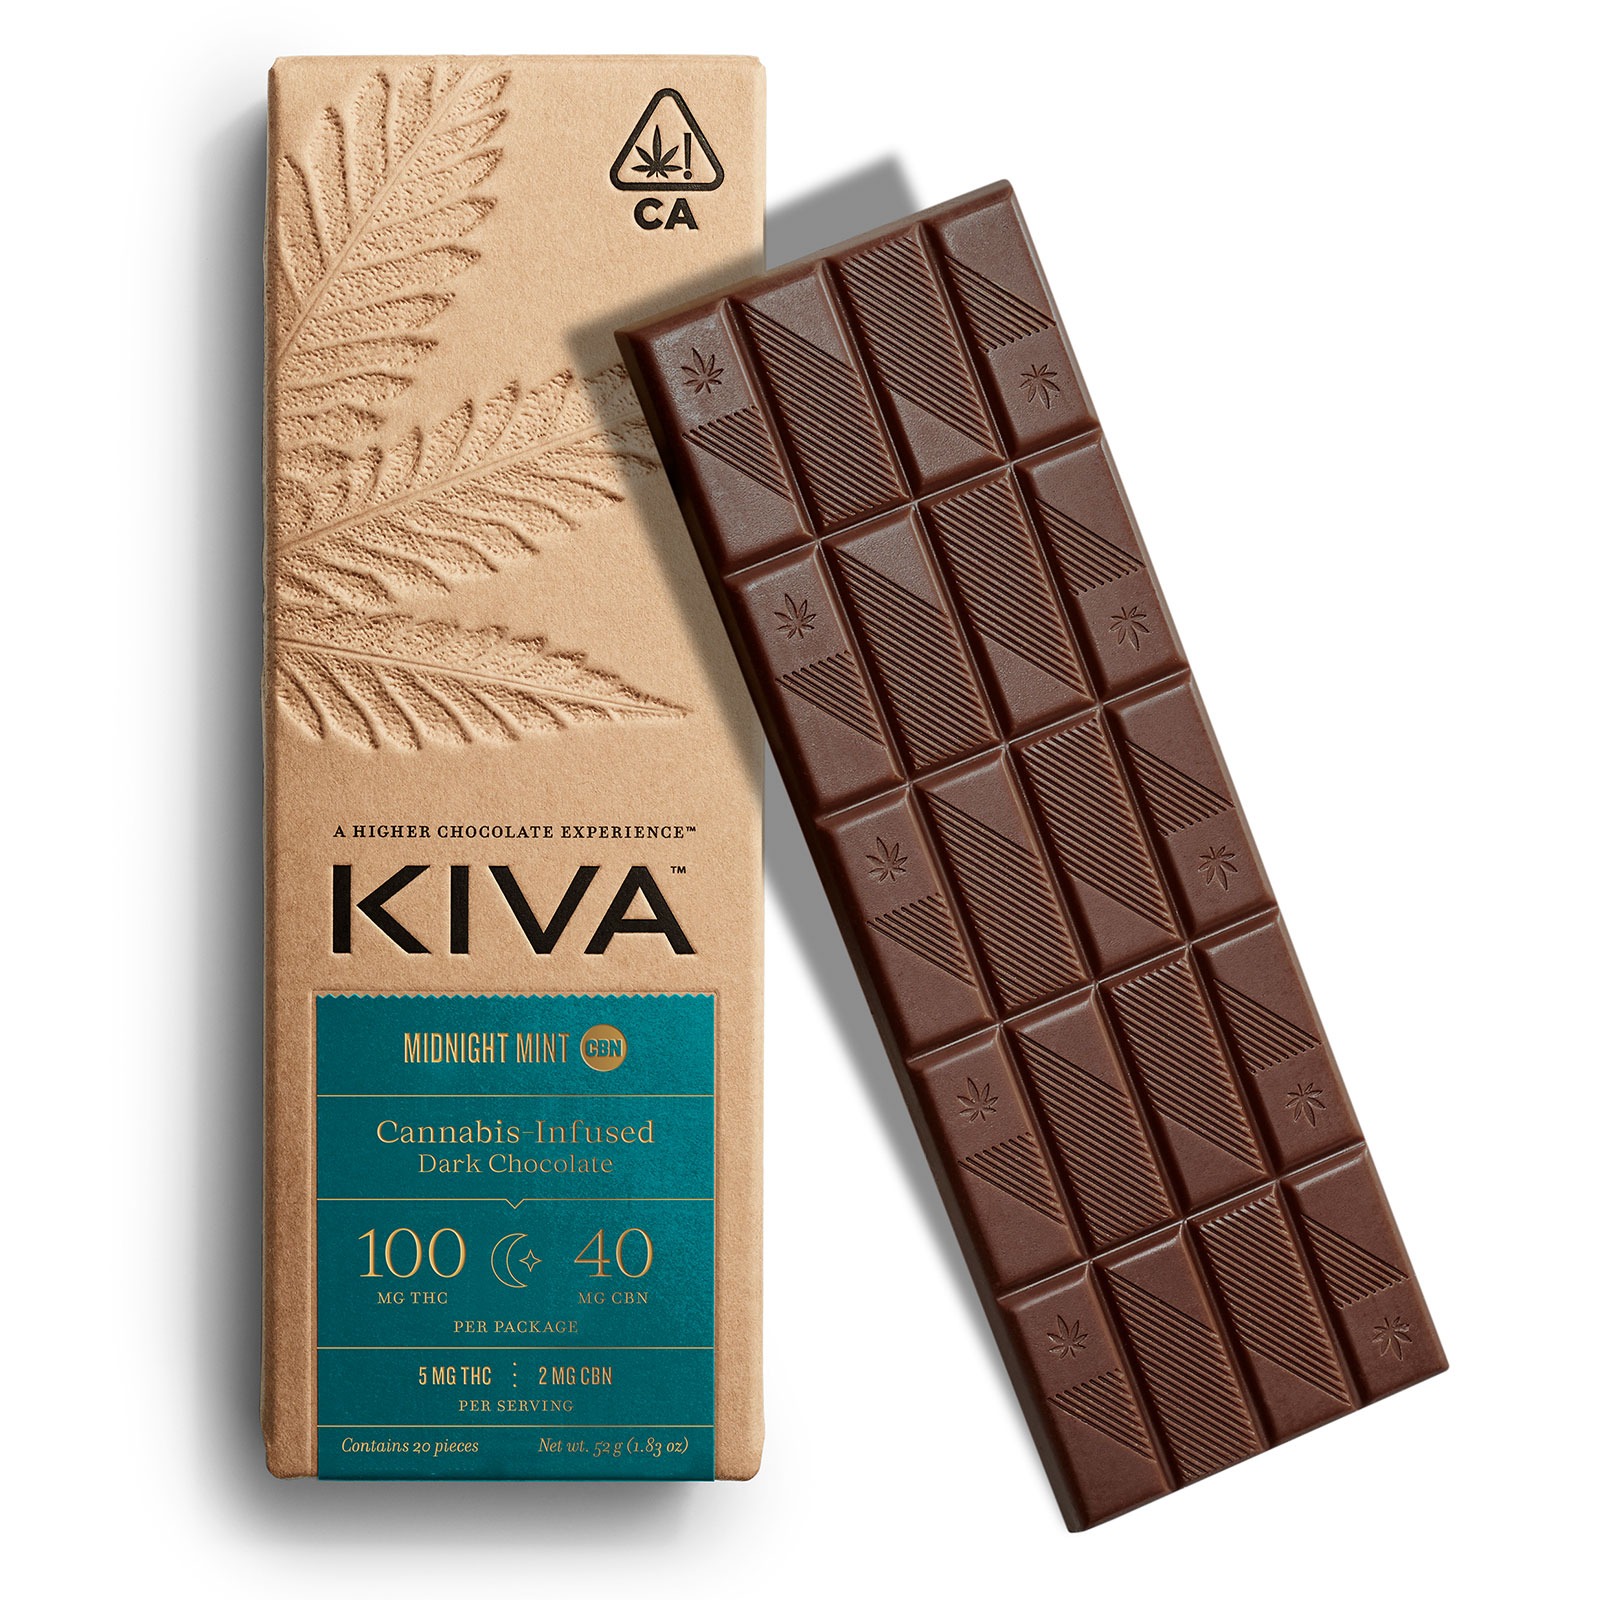 5mg : 2mg CBN Kiva 'Midnight Mint' Dark Chocolate Bar 100mg THC : 40mg CBN total